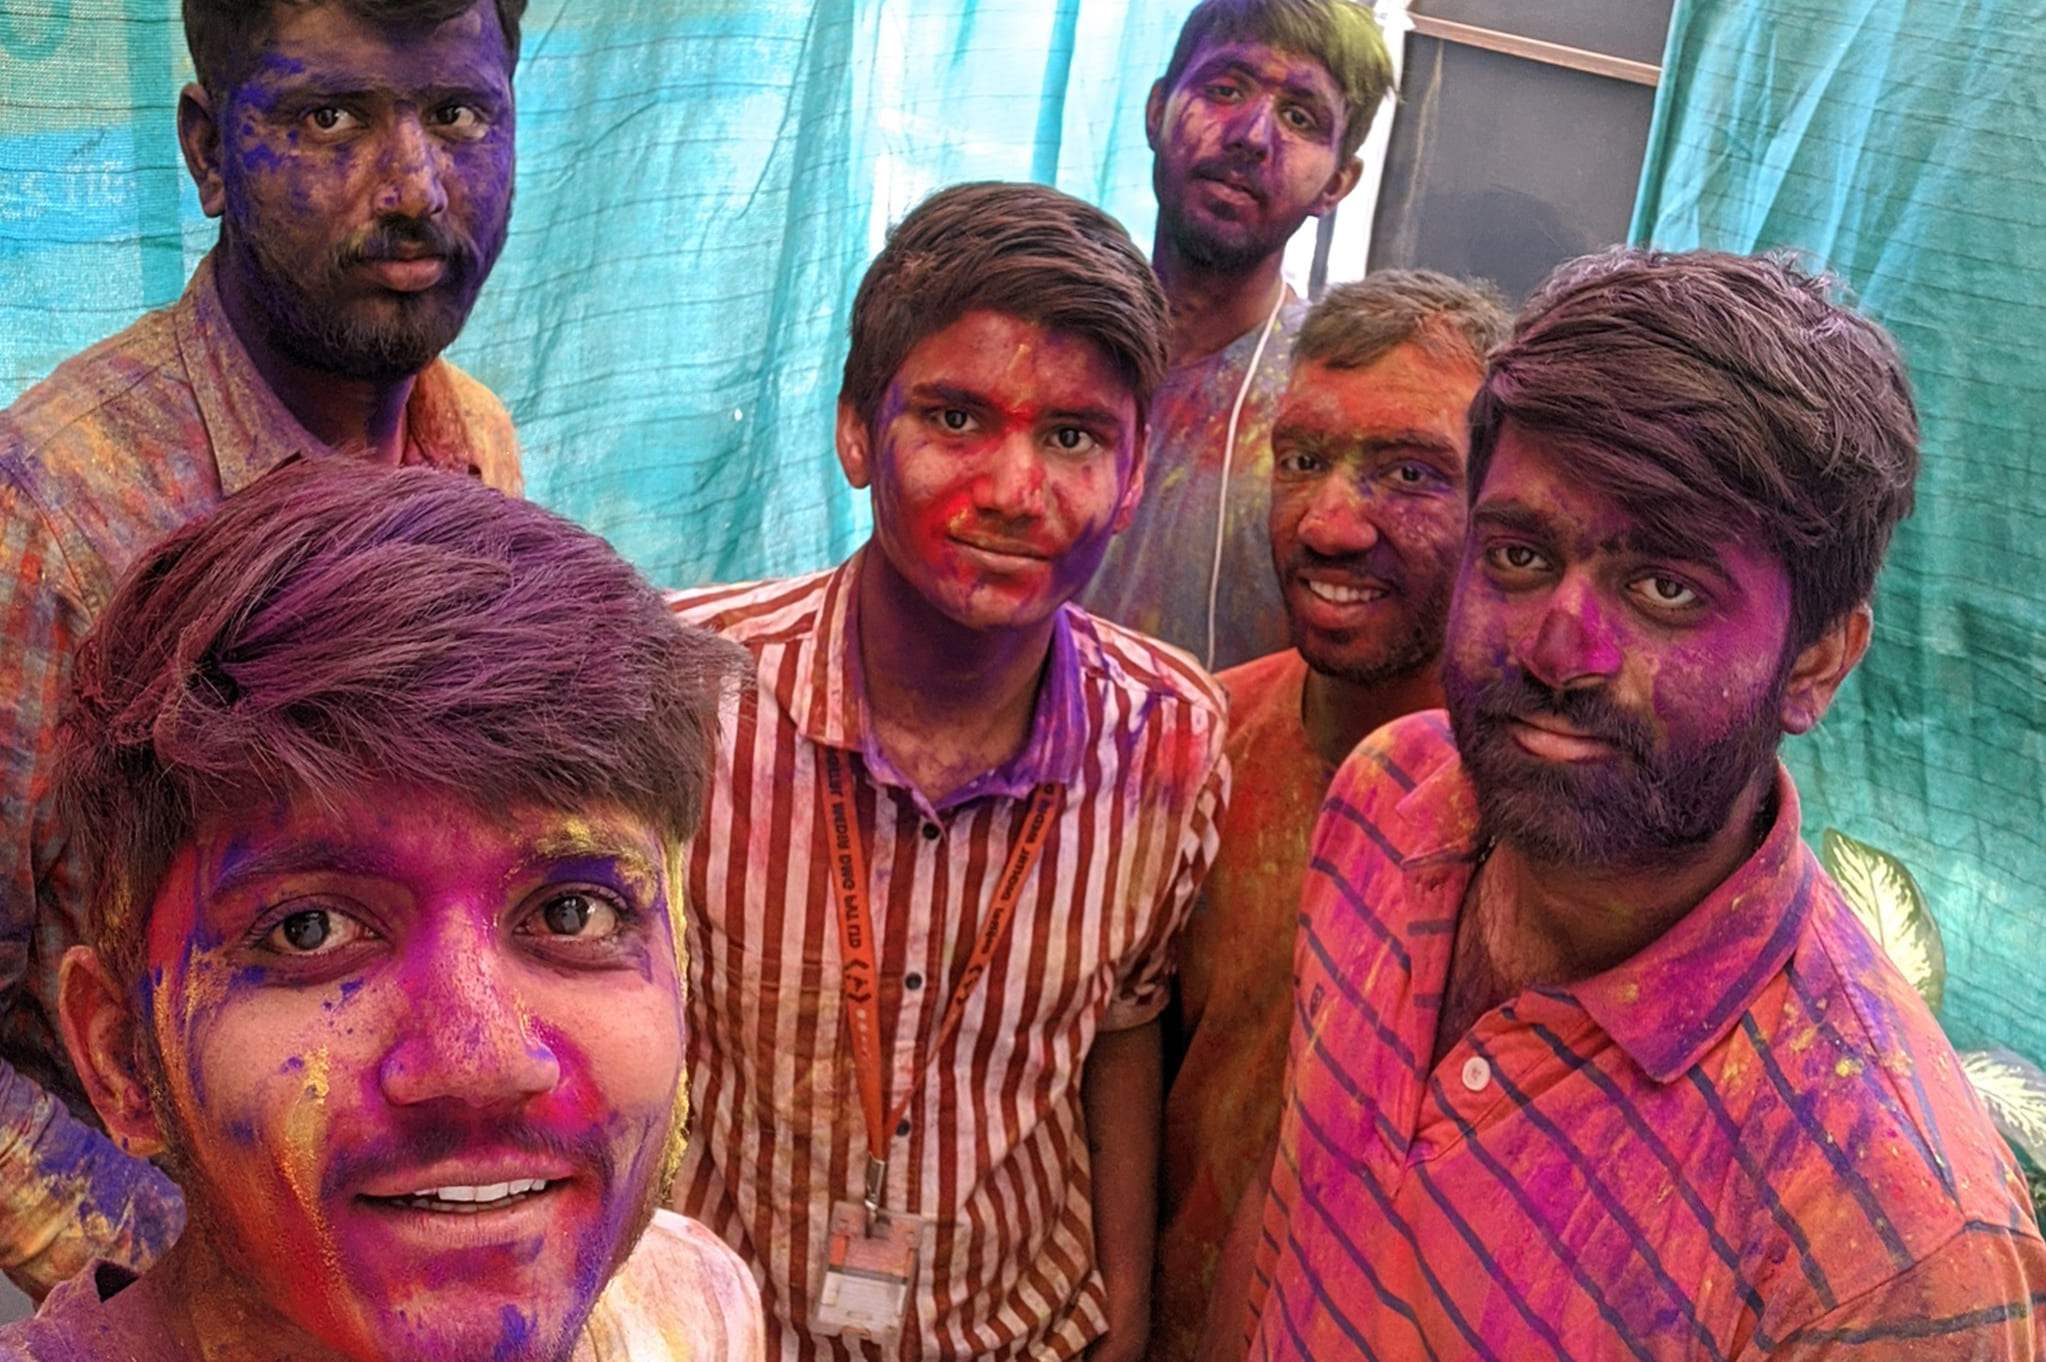 Joyful Faces Covered in Holi